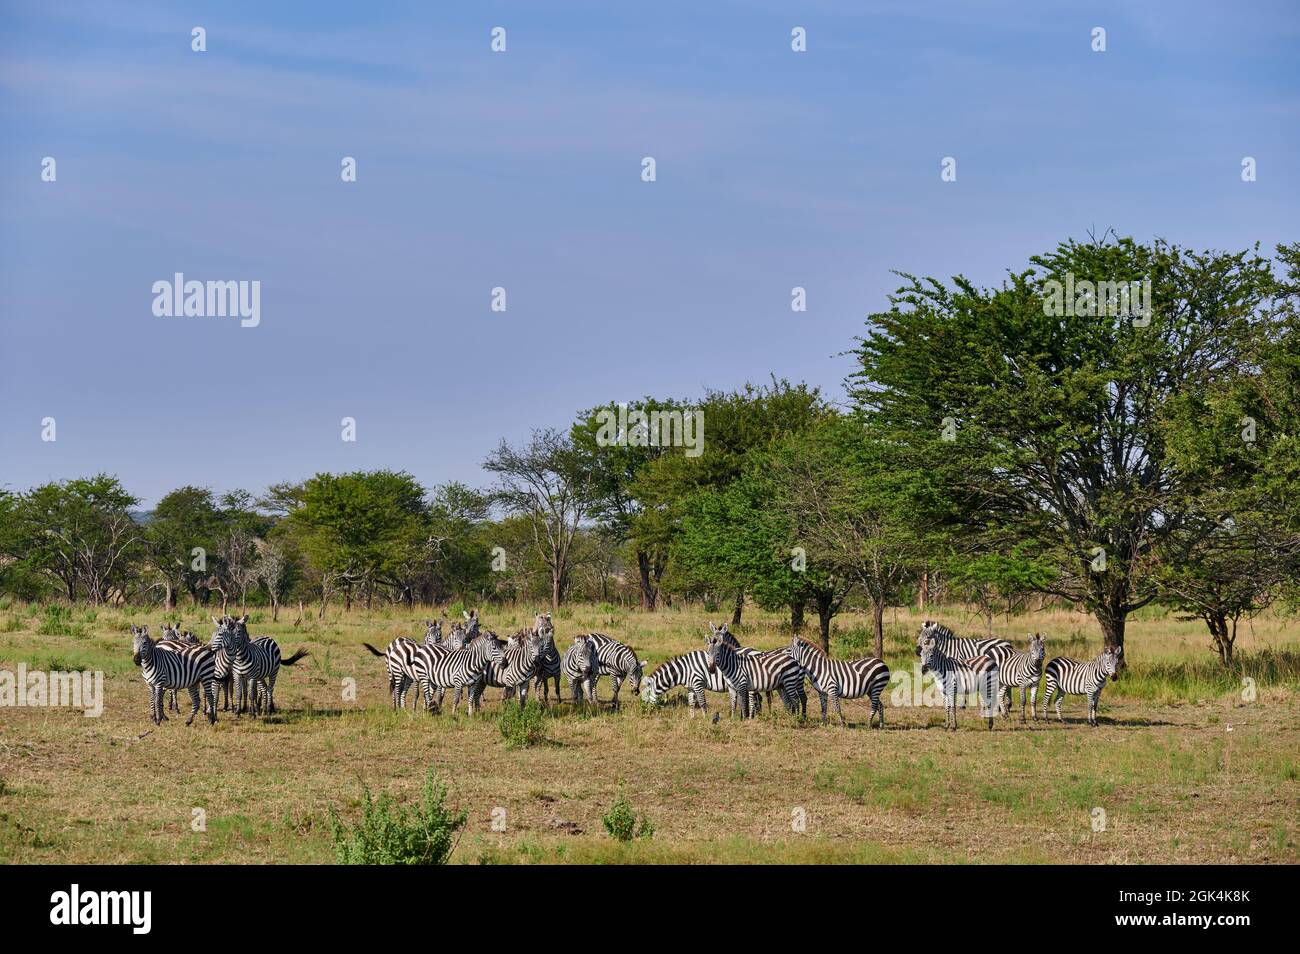 A herd of plains zebras (Equus quagga) in Serengeti National Park, Tanzania, Africa Stock Photo